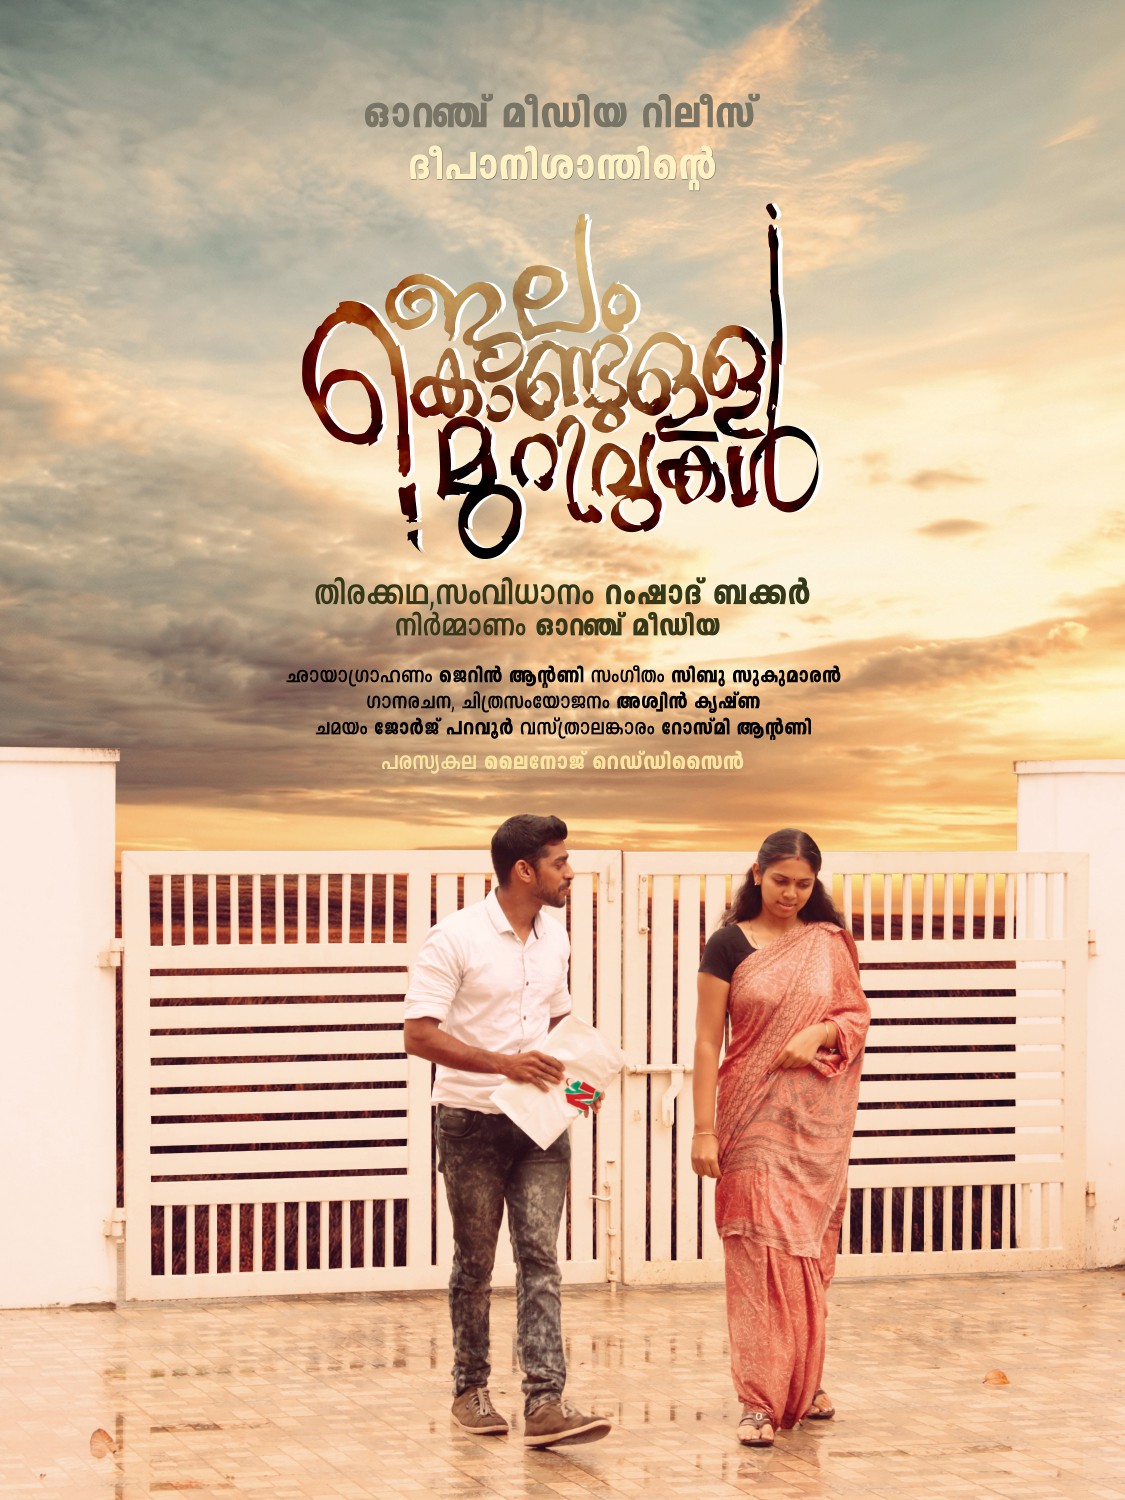 Extra Large Movie Poster Image for Jalam Kondulla Murivukal